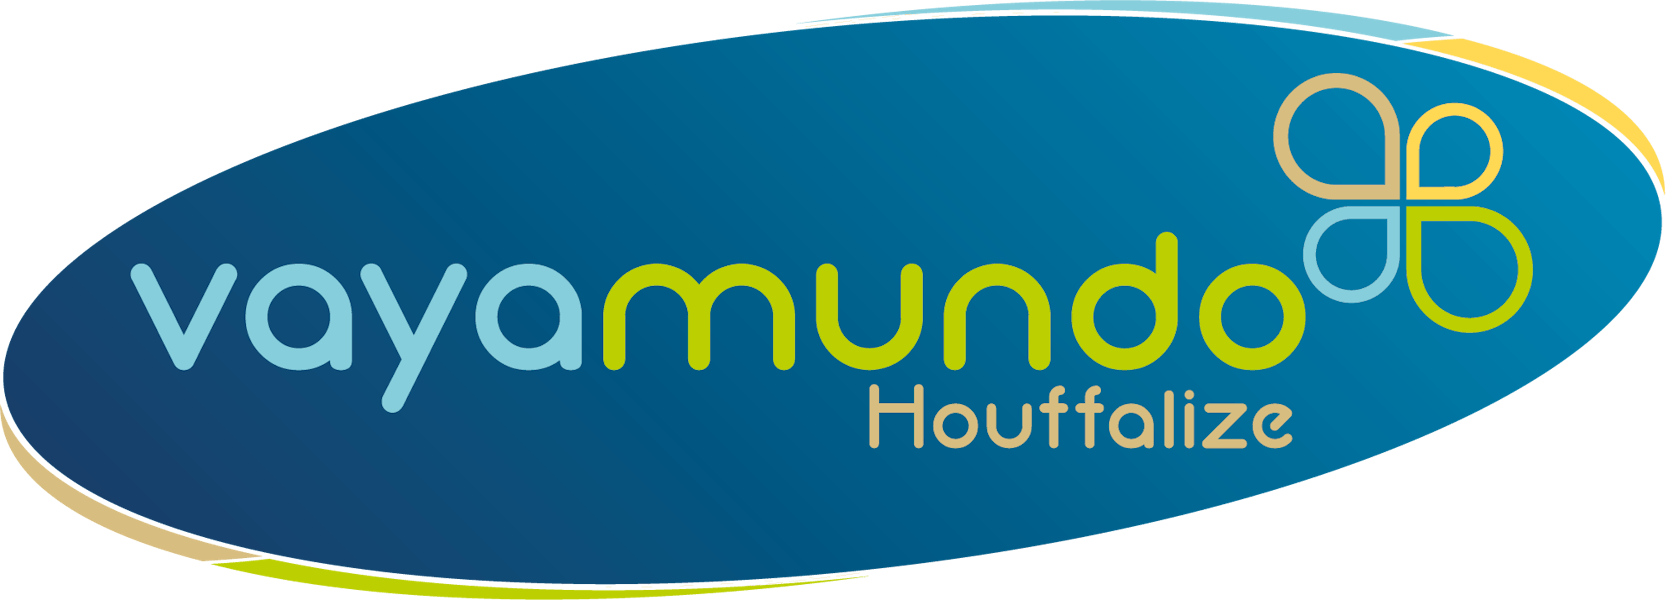 Logo Vayamundo Houffalize Blue